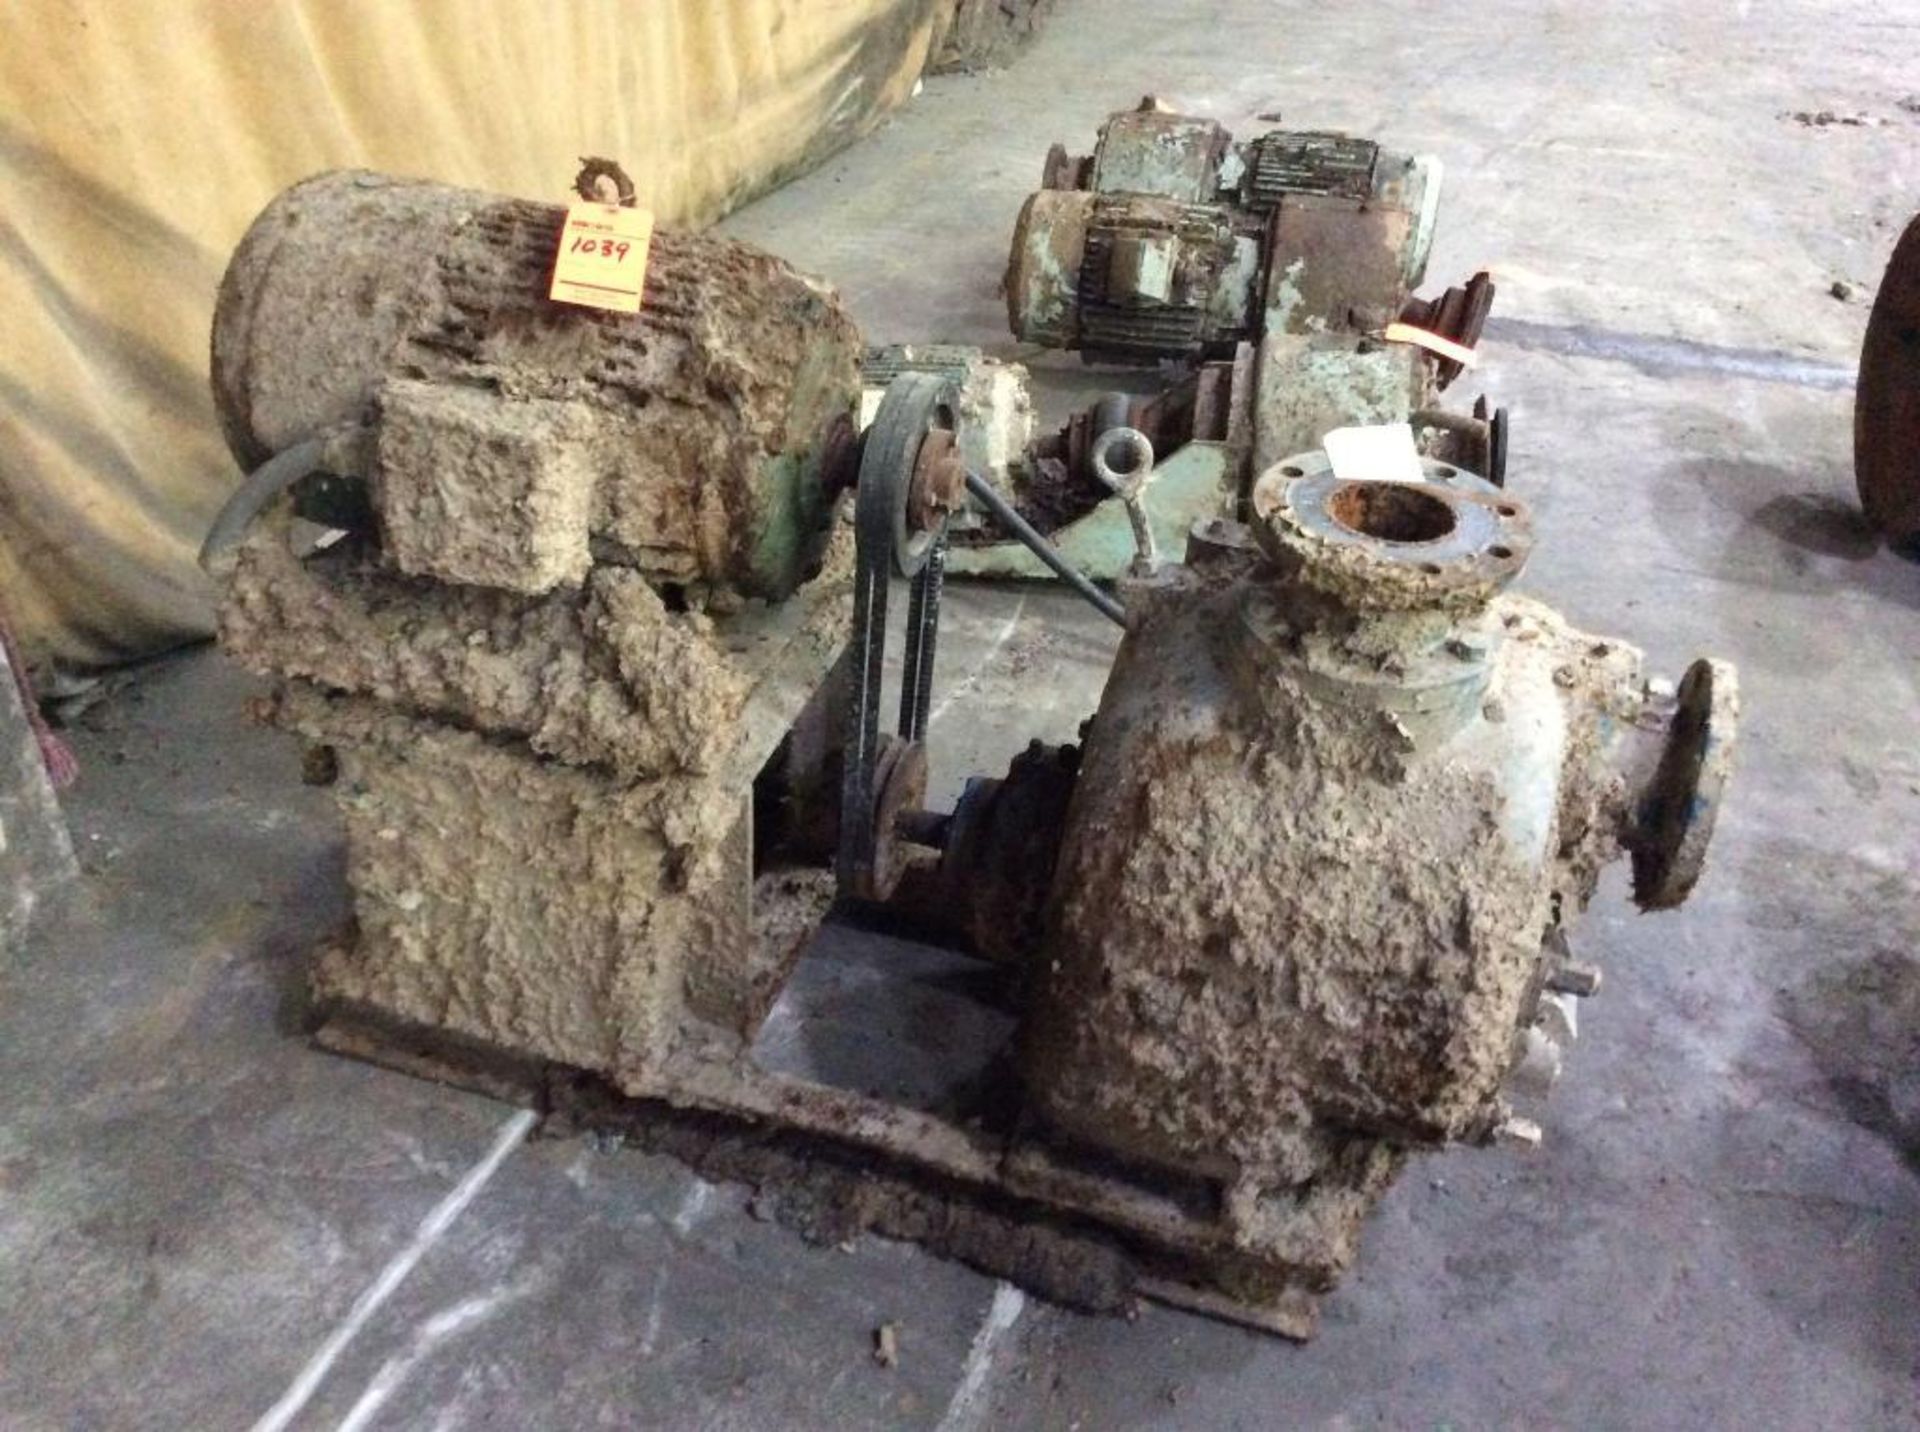 GR scavenger pump, L-series self priming, with approx. 20 hp. motor